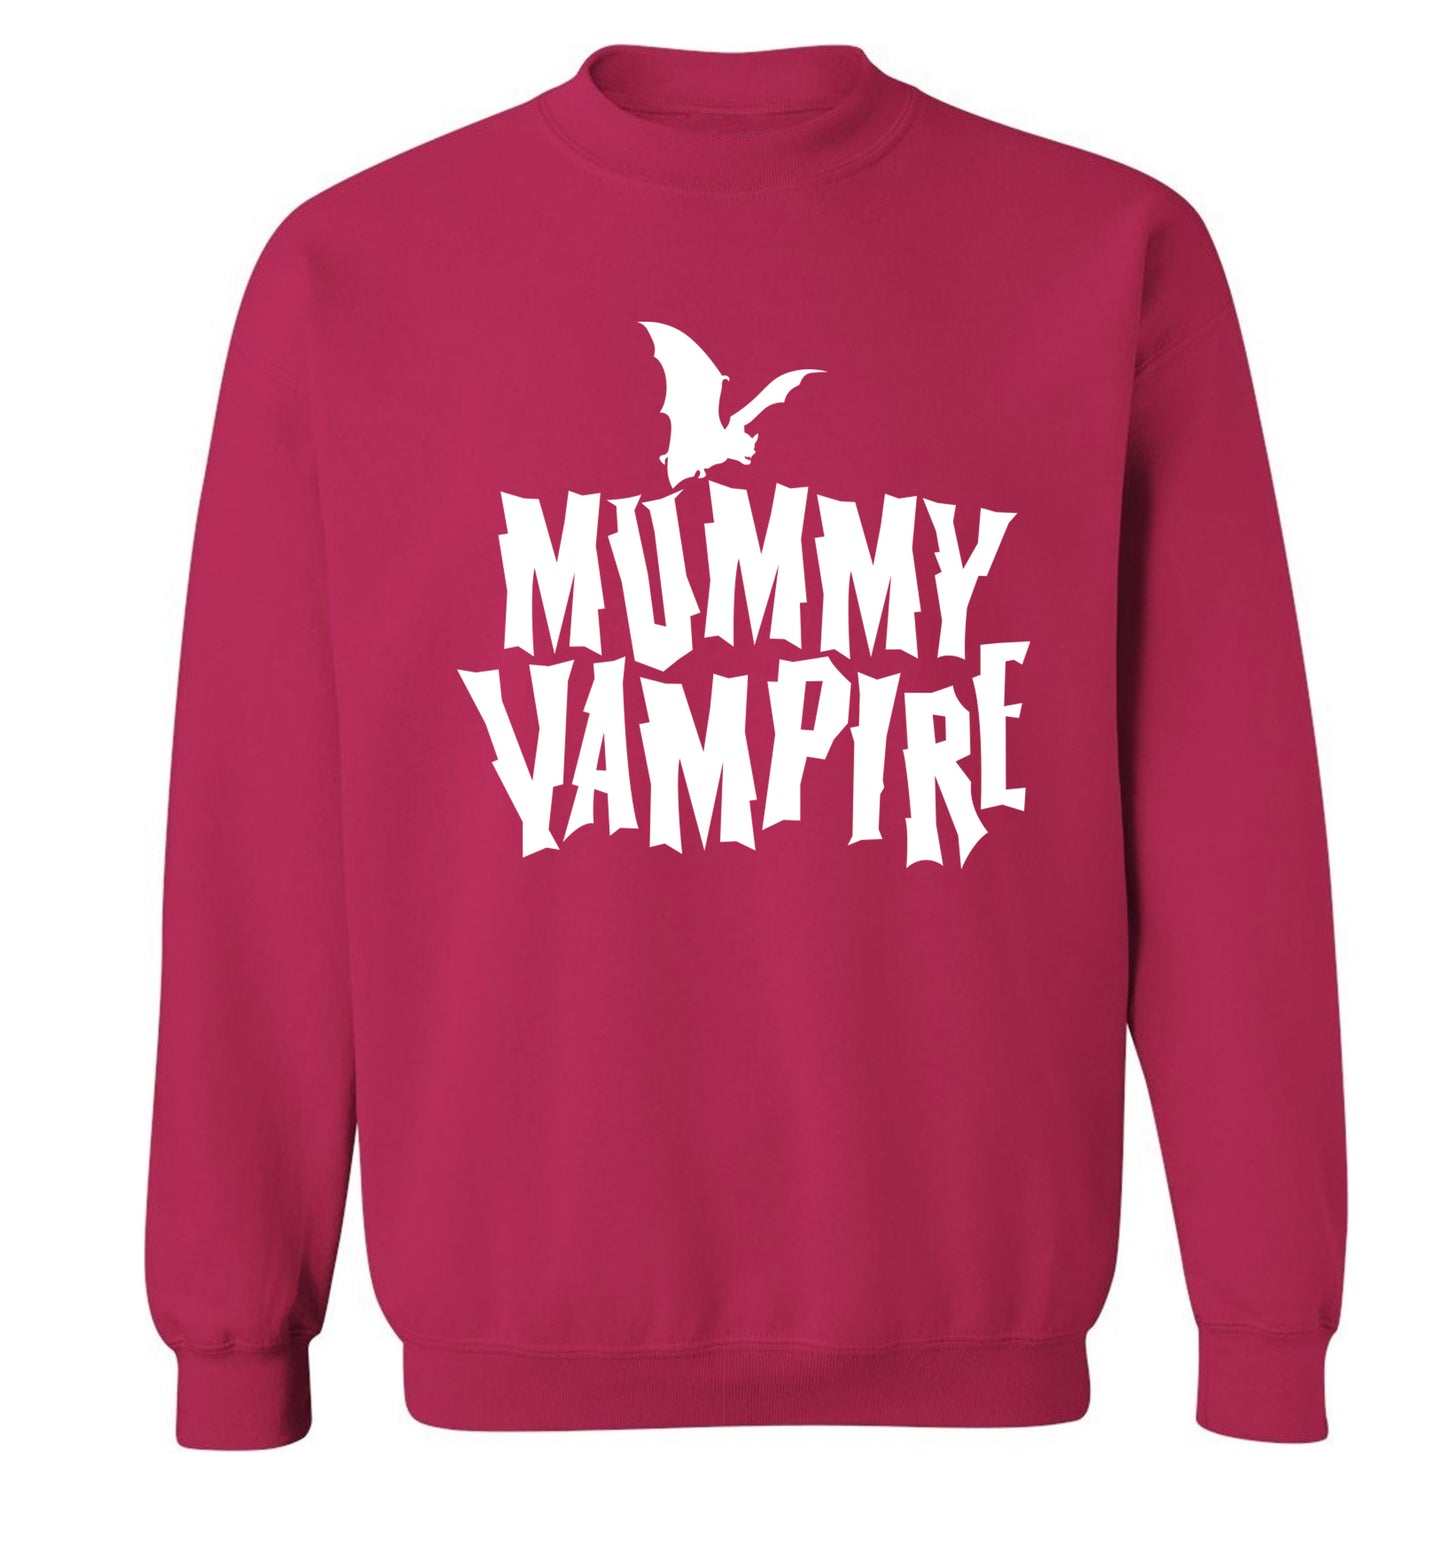 Mummy vampire adult's unisex pink sweater 2XL